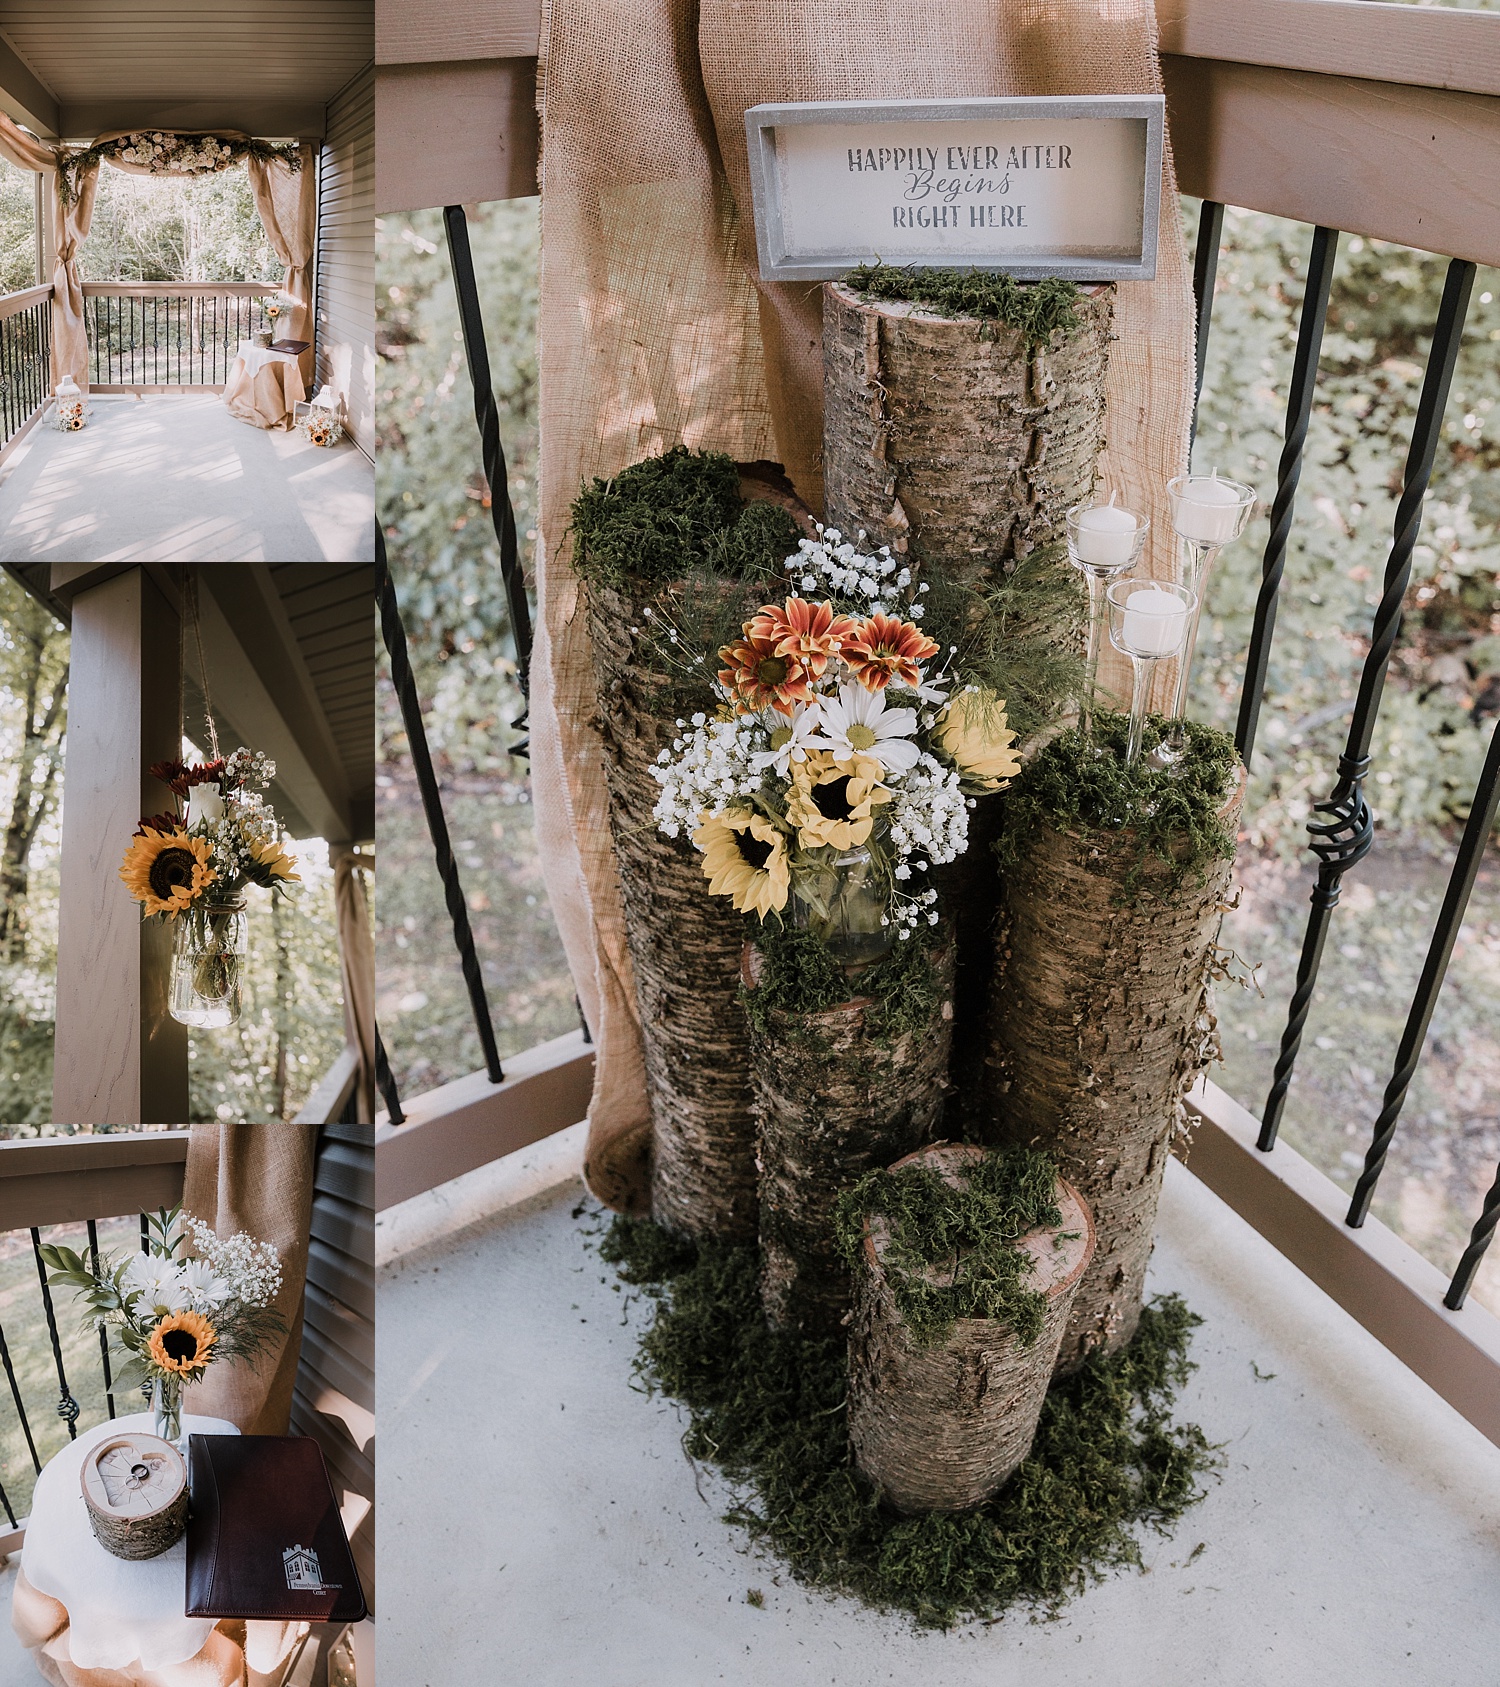 Lehigh Valley Alburtis Pennsylvania fall rustic intimate backyard wedding photographer